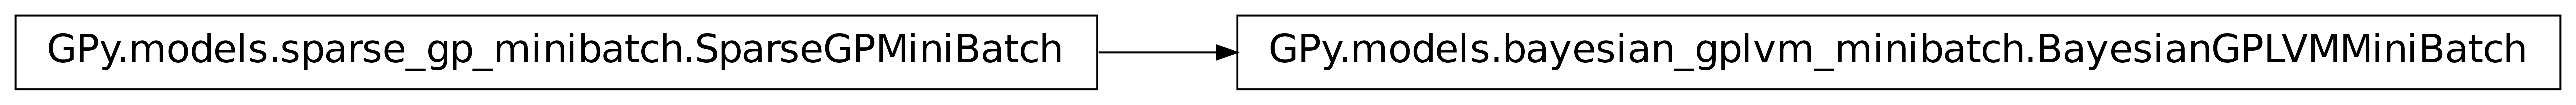 Inheritance diagram of GPy.models.bayesian_gplvm_minibatch